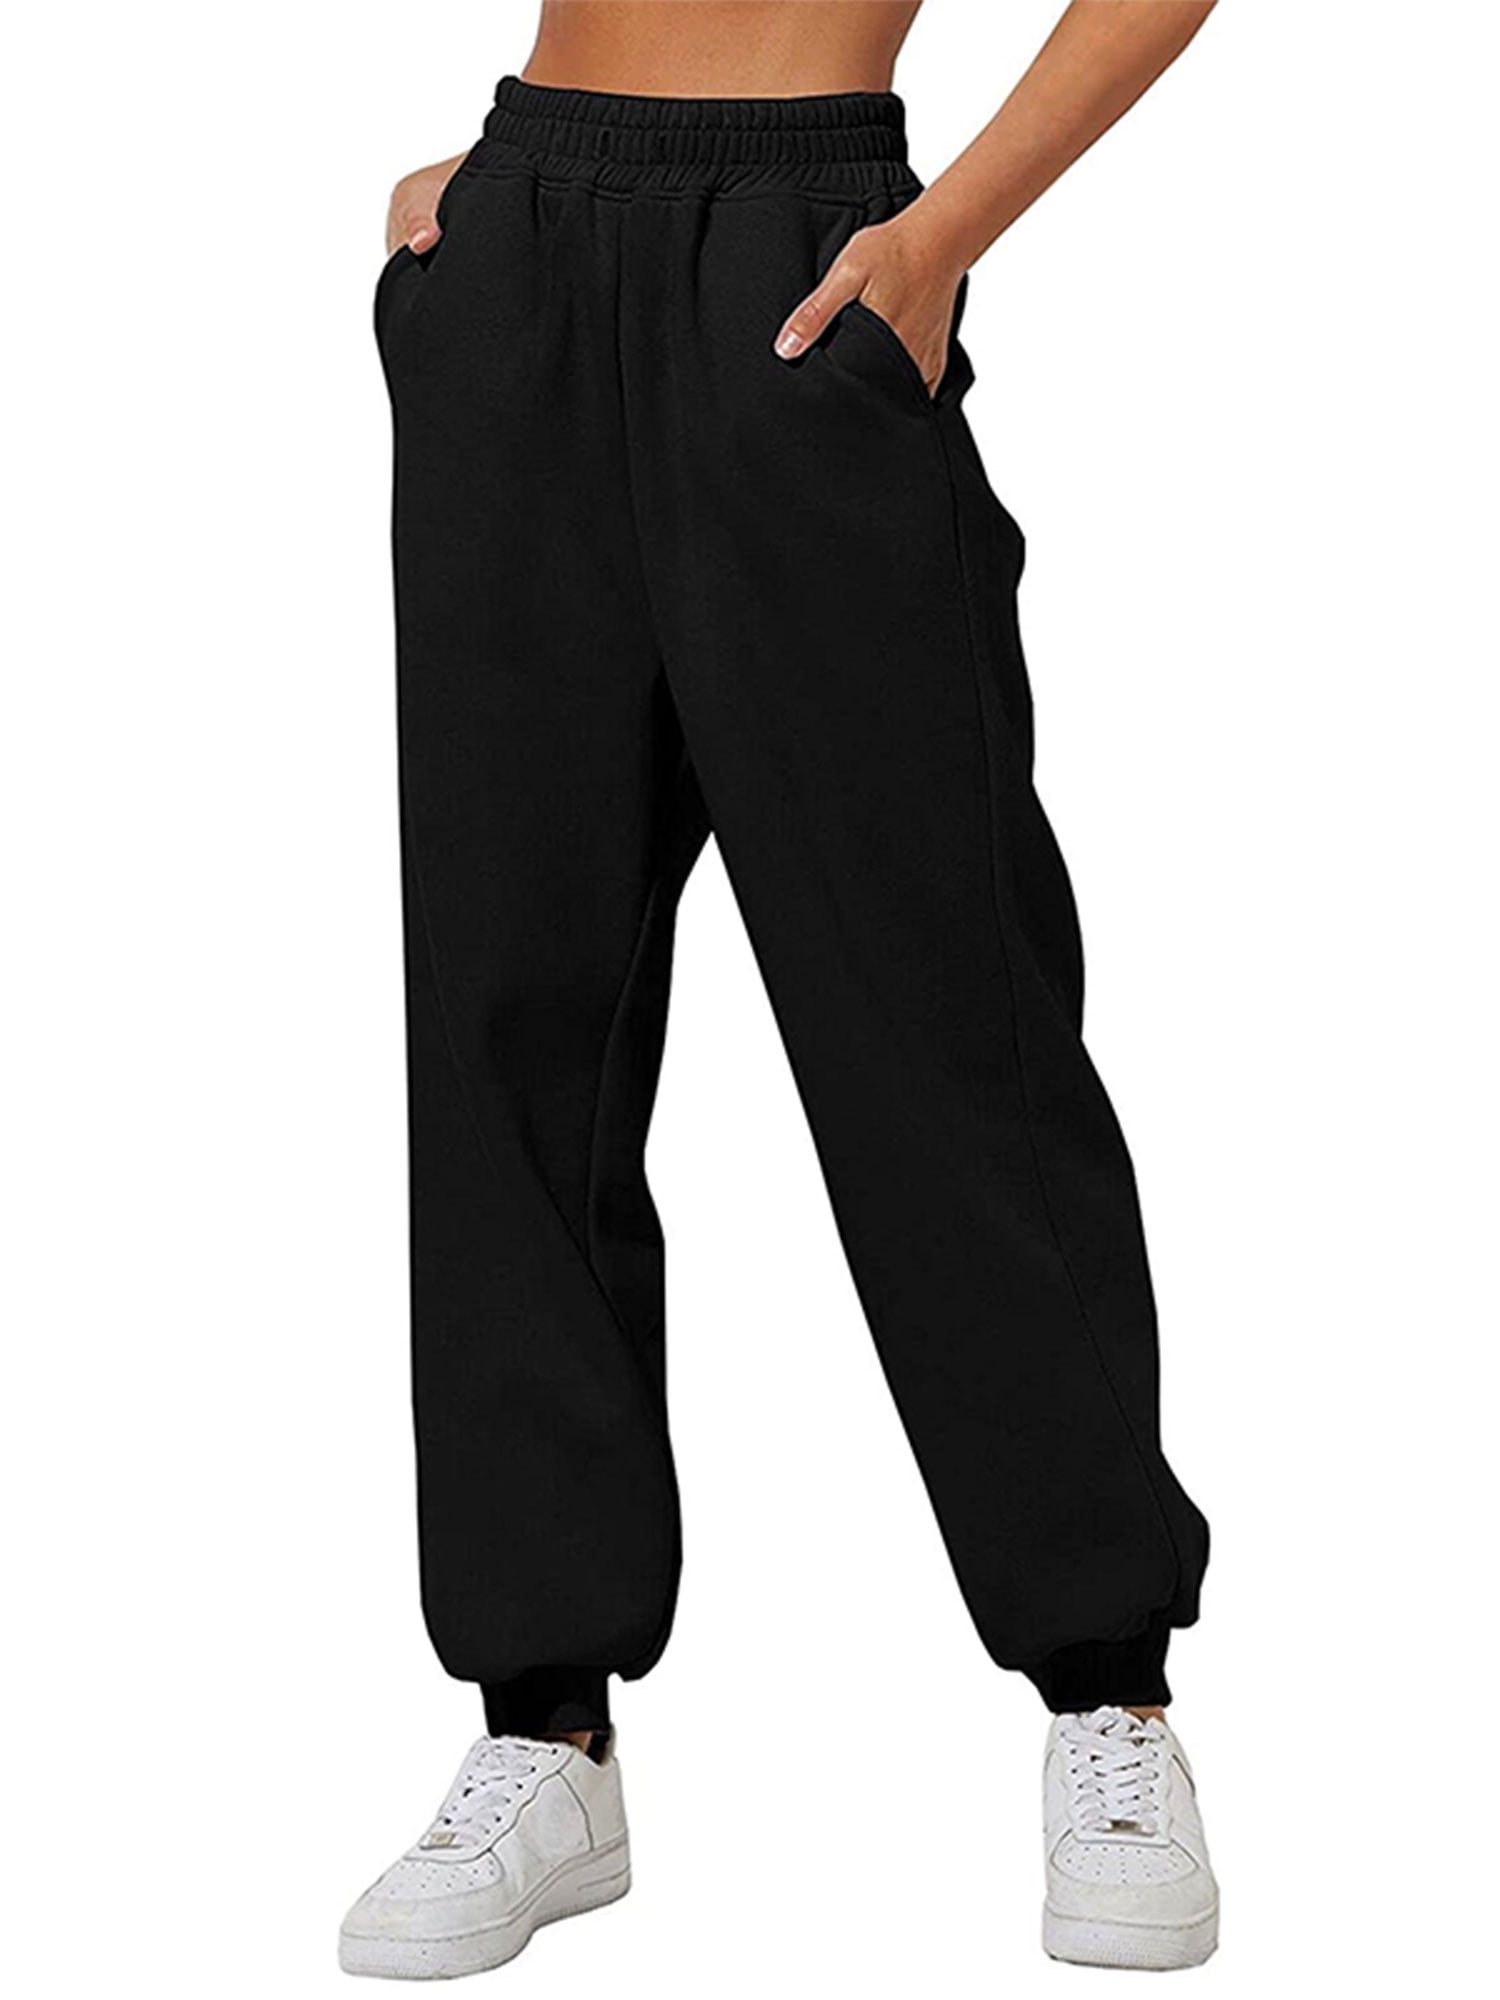 QIWN Women Joggers Sweatpants 2XL Casual Baseball Bottom Pants Loose Sports  Letter Pants Autumn Winter Clothing Wholesale 6118